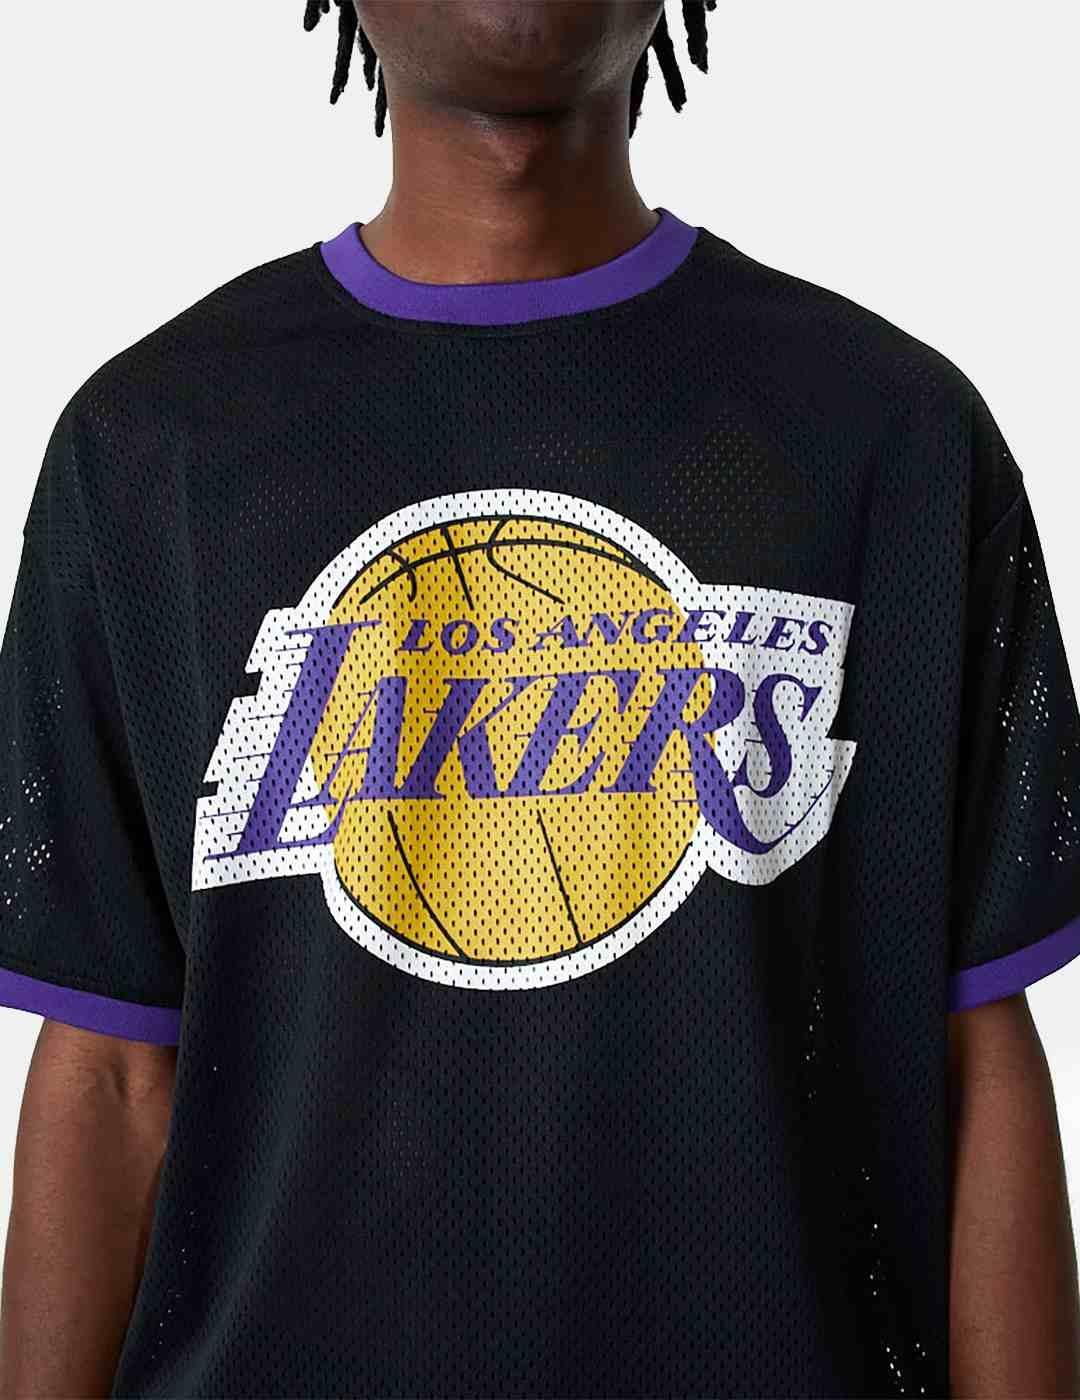 Camiseta New Era NBA Los Angeles Lakers Negro